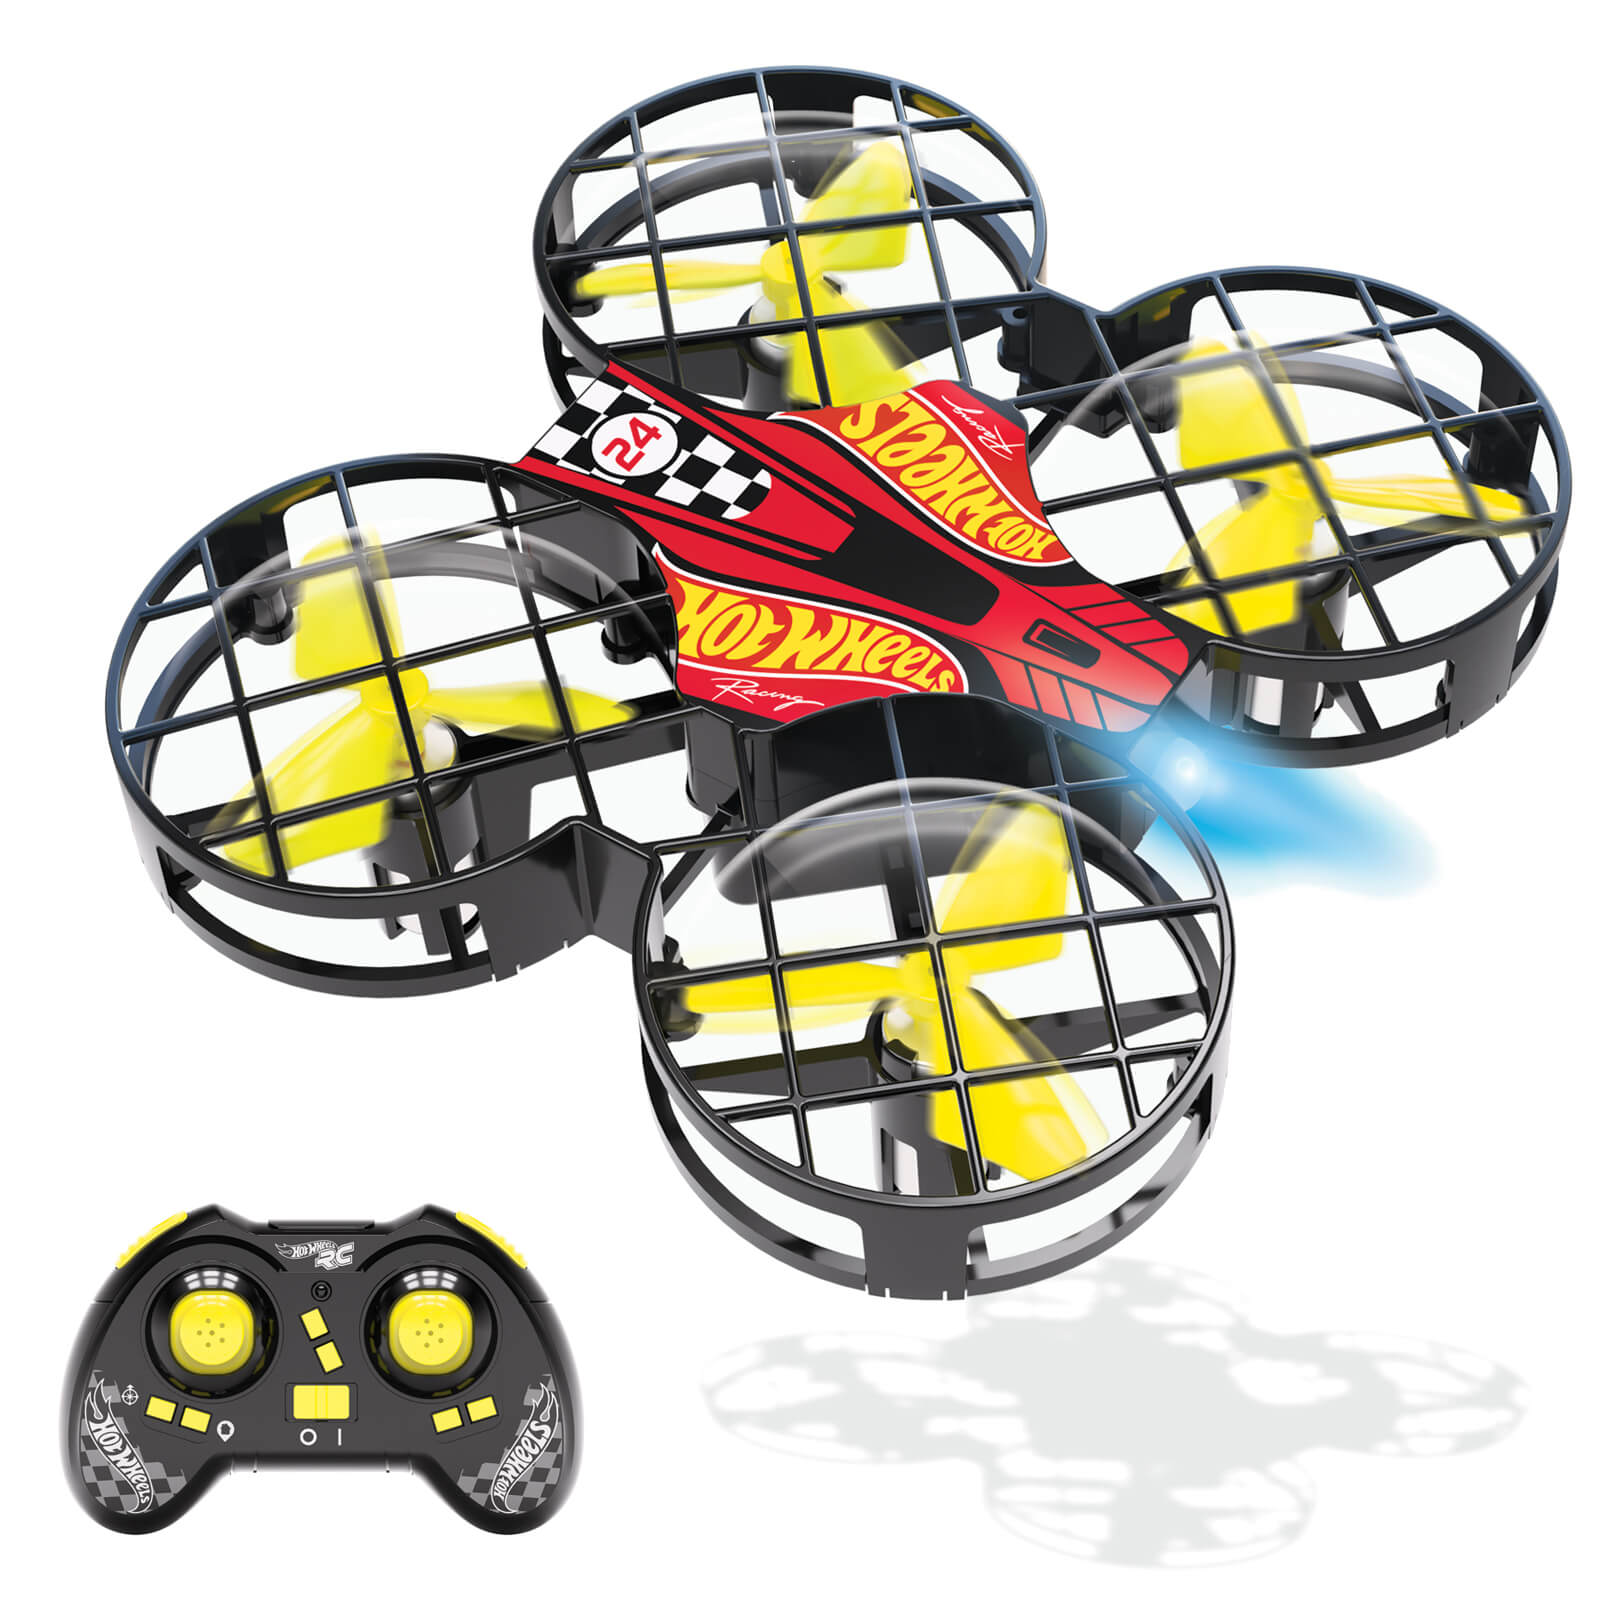 Hot Wheels DRX Hawk Racing Drone